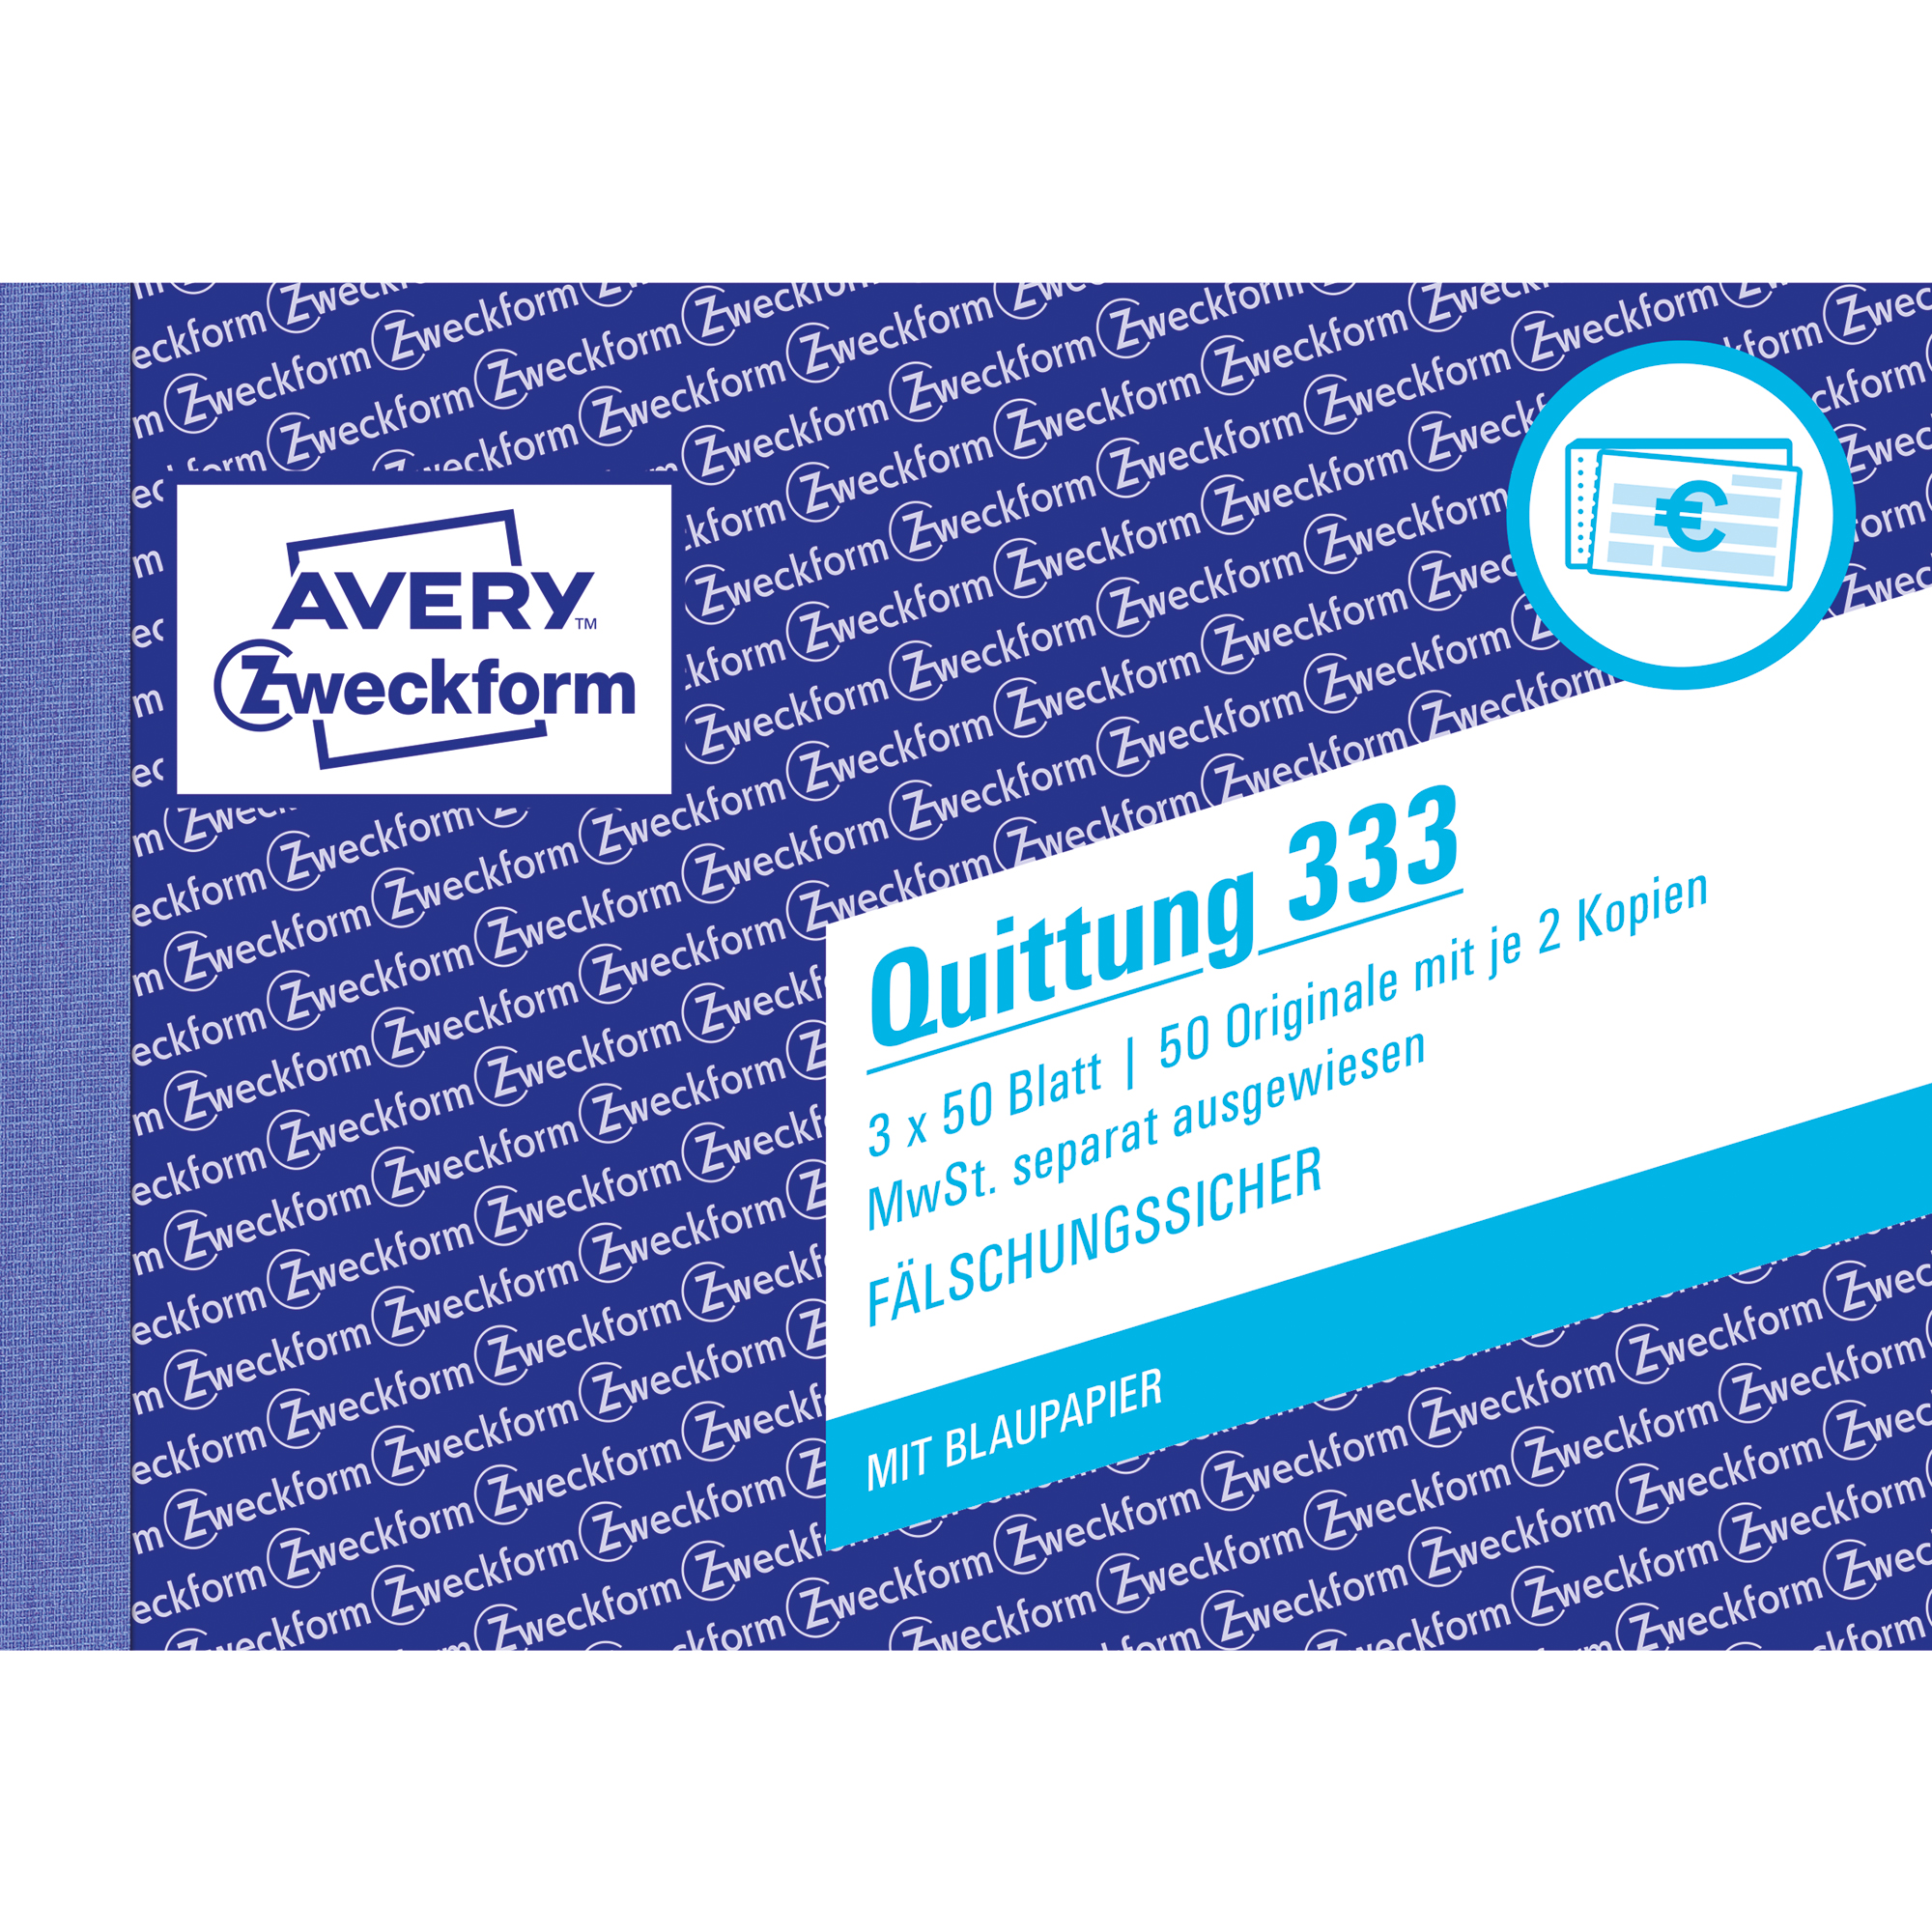 Avery Zweckform Quittung 333